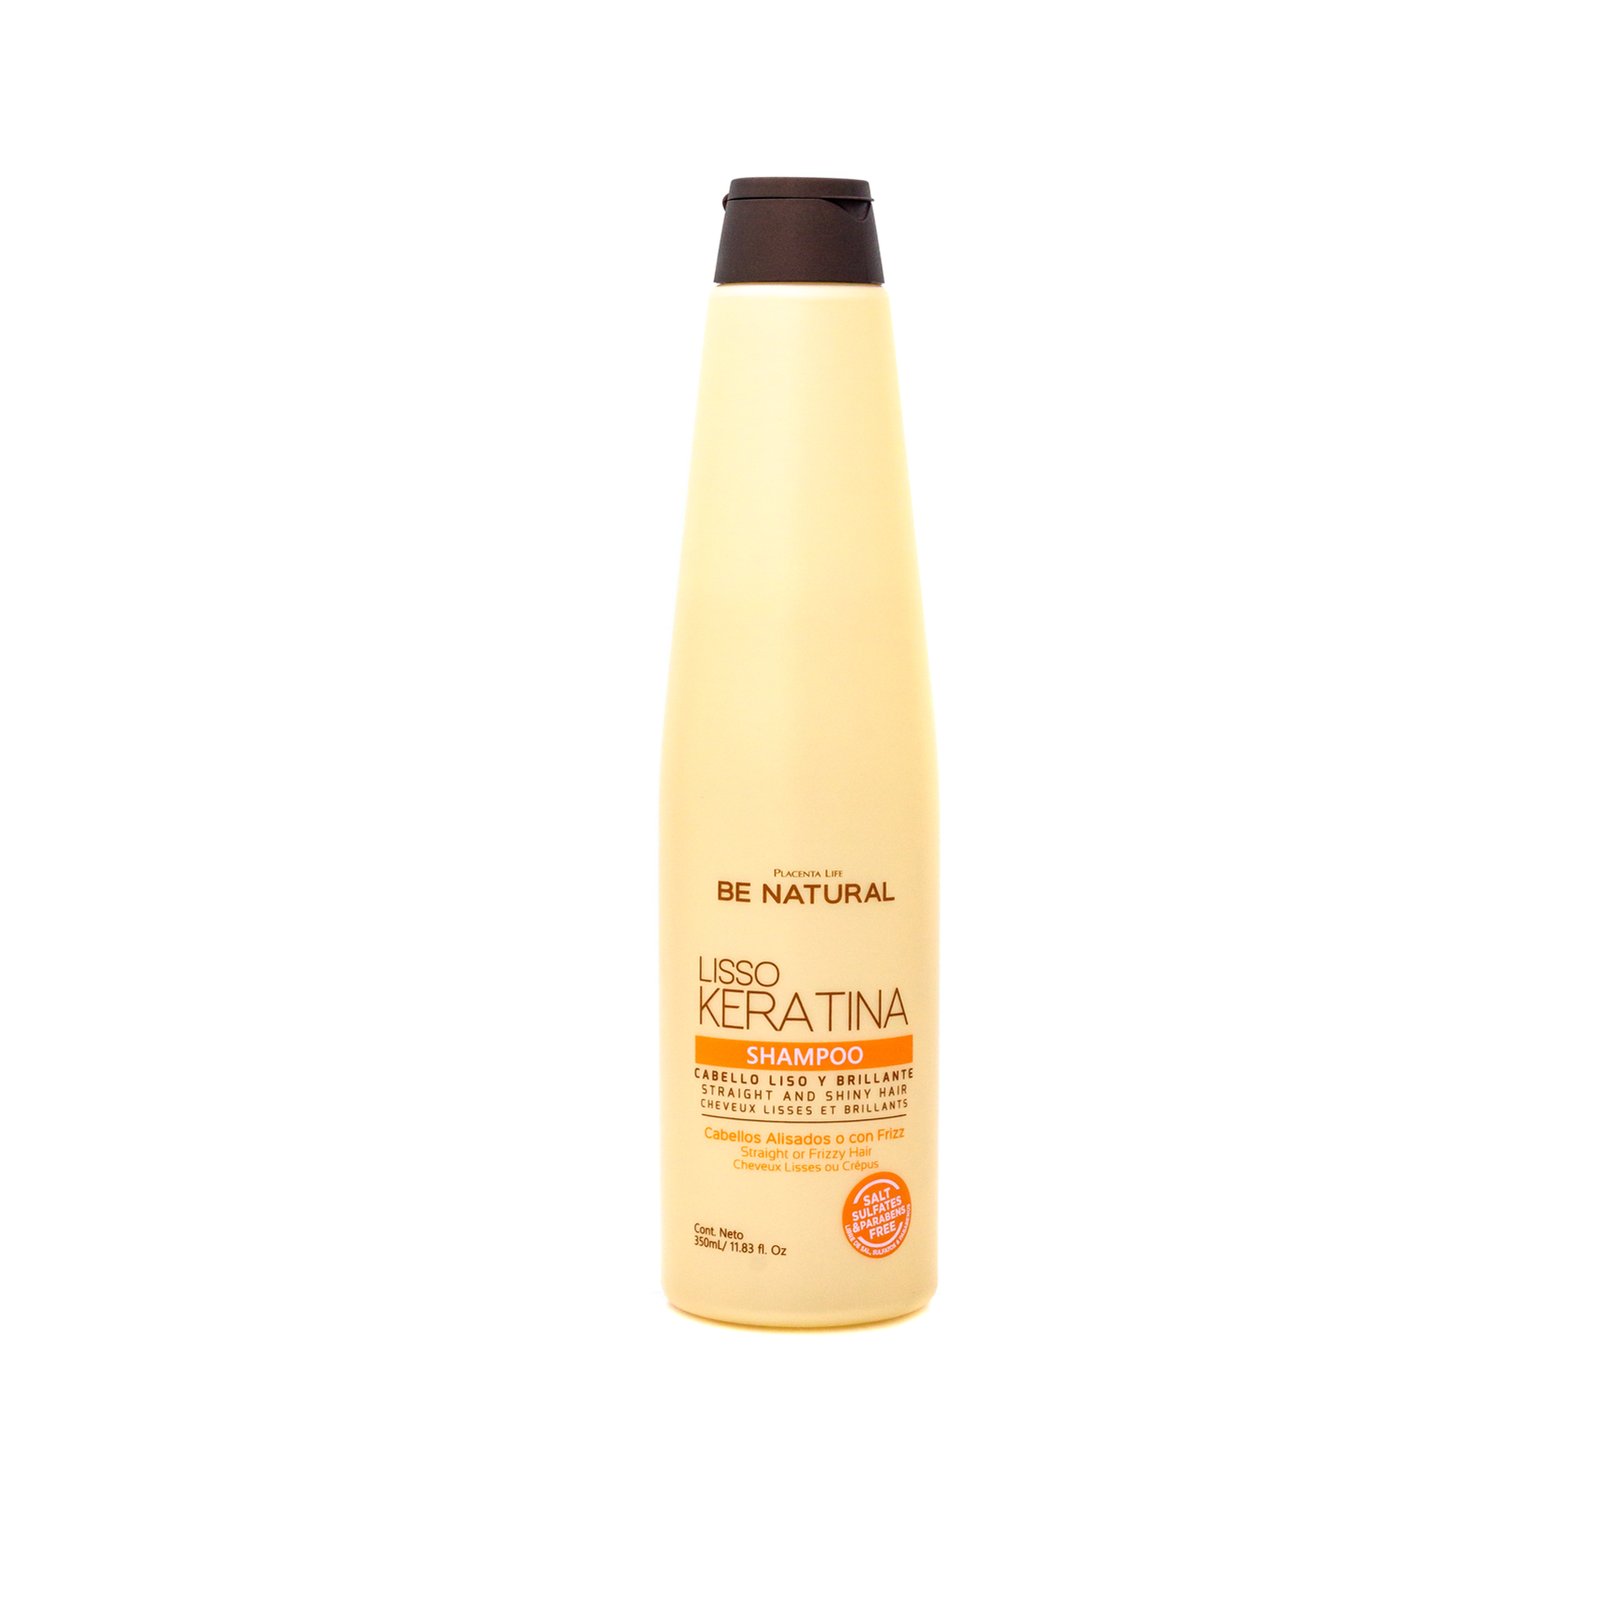 BeNatural Lisso Keratina Shampoo 350ml (11.83 fl oz)